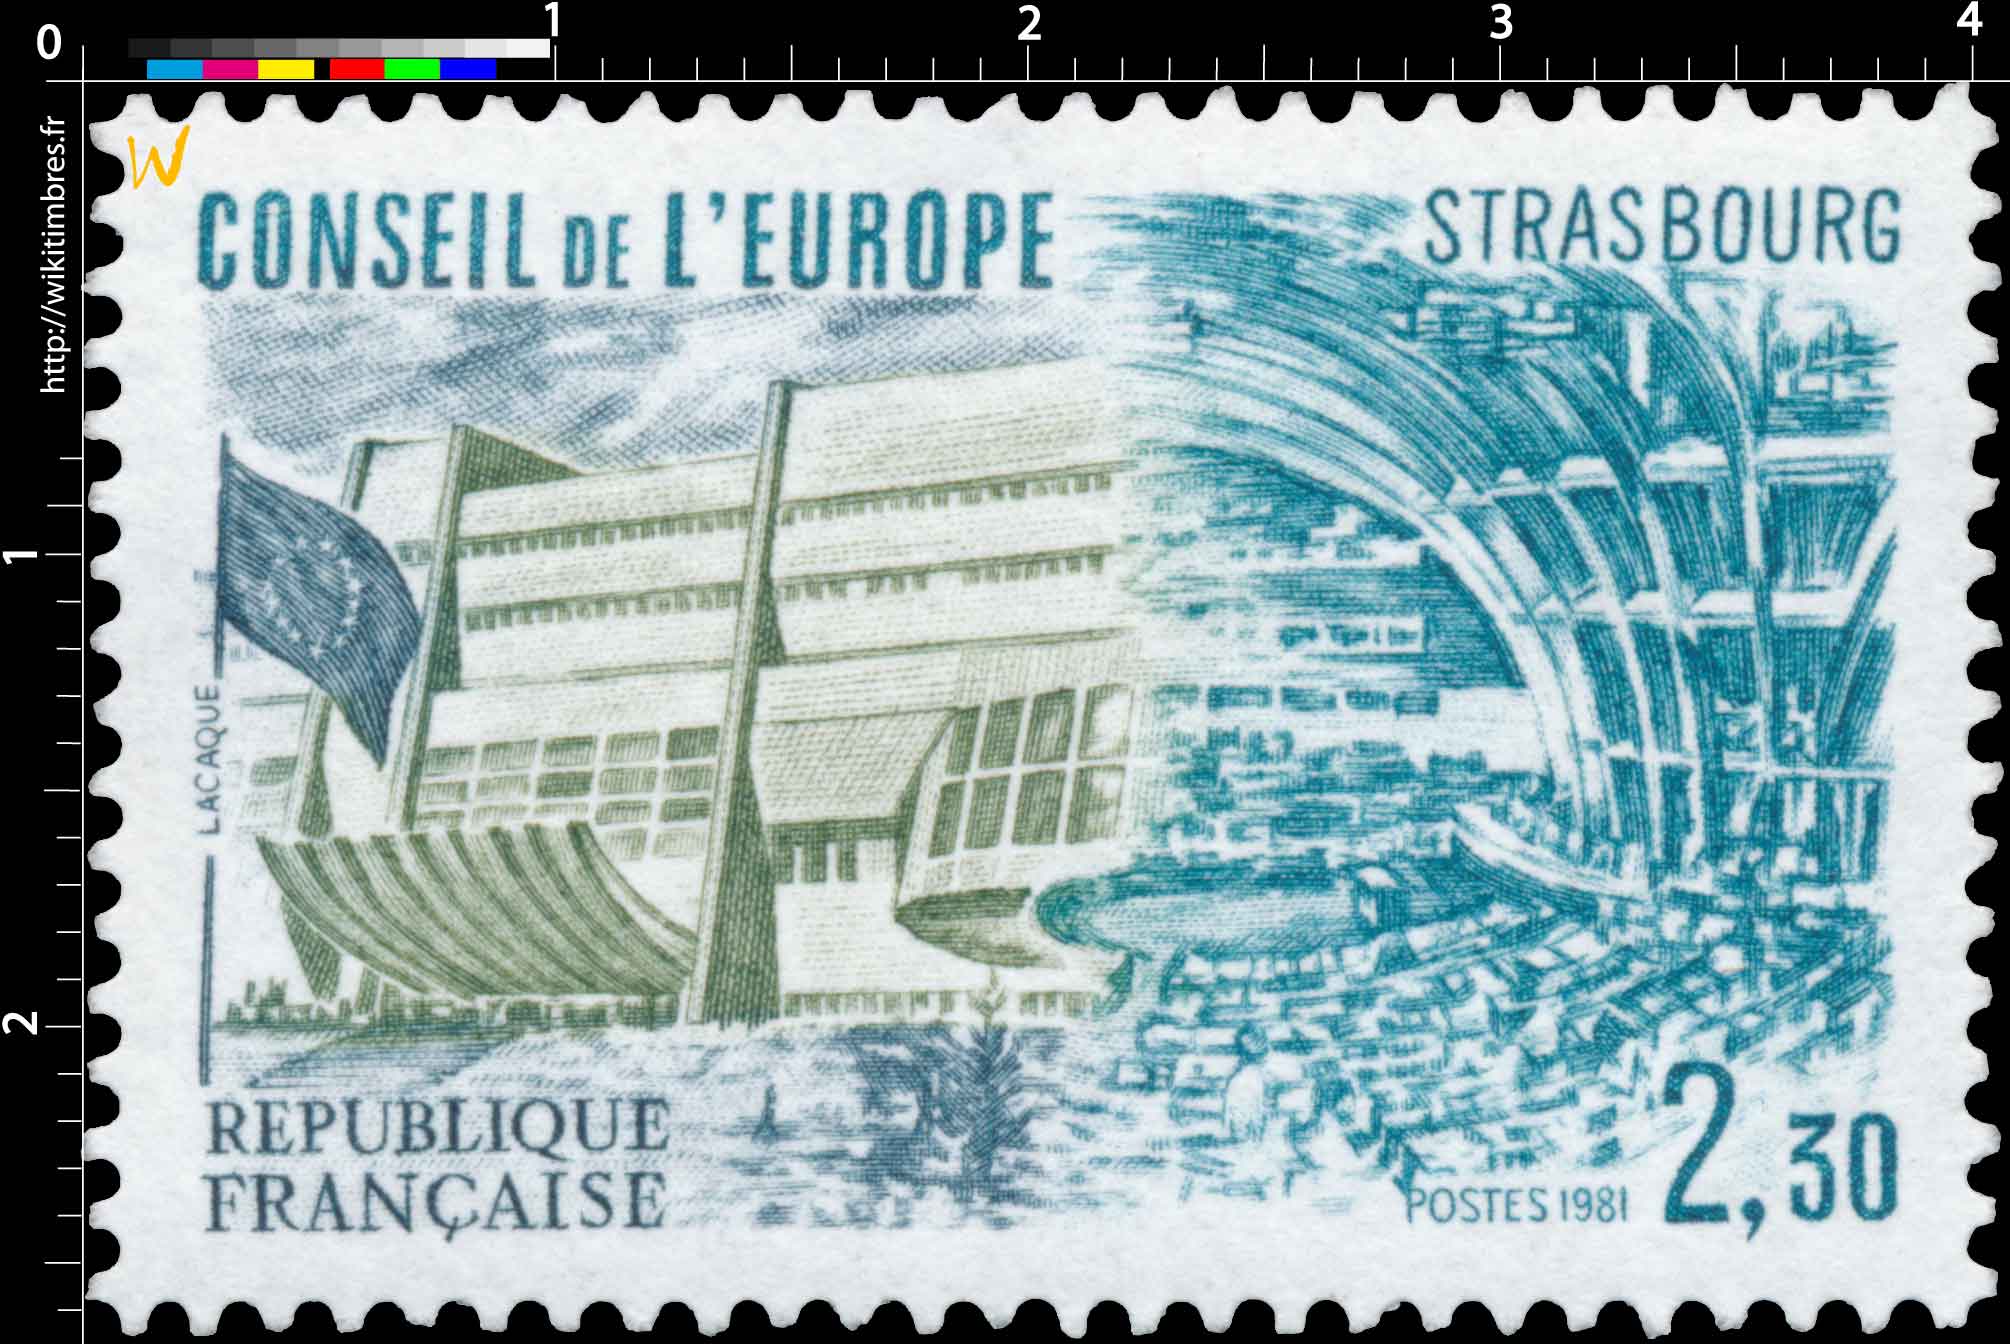 1981 CONSEIL DE L'EUROPE STRASBOURG